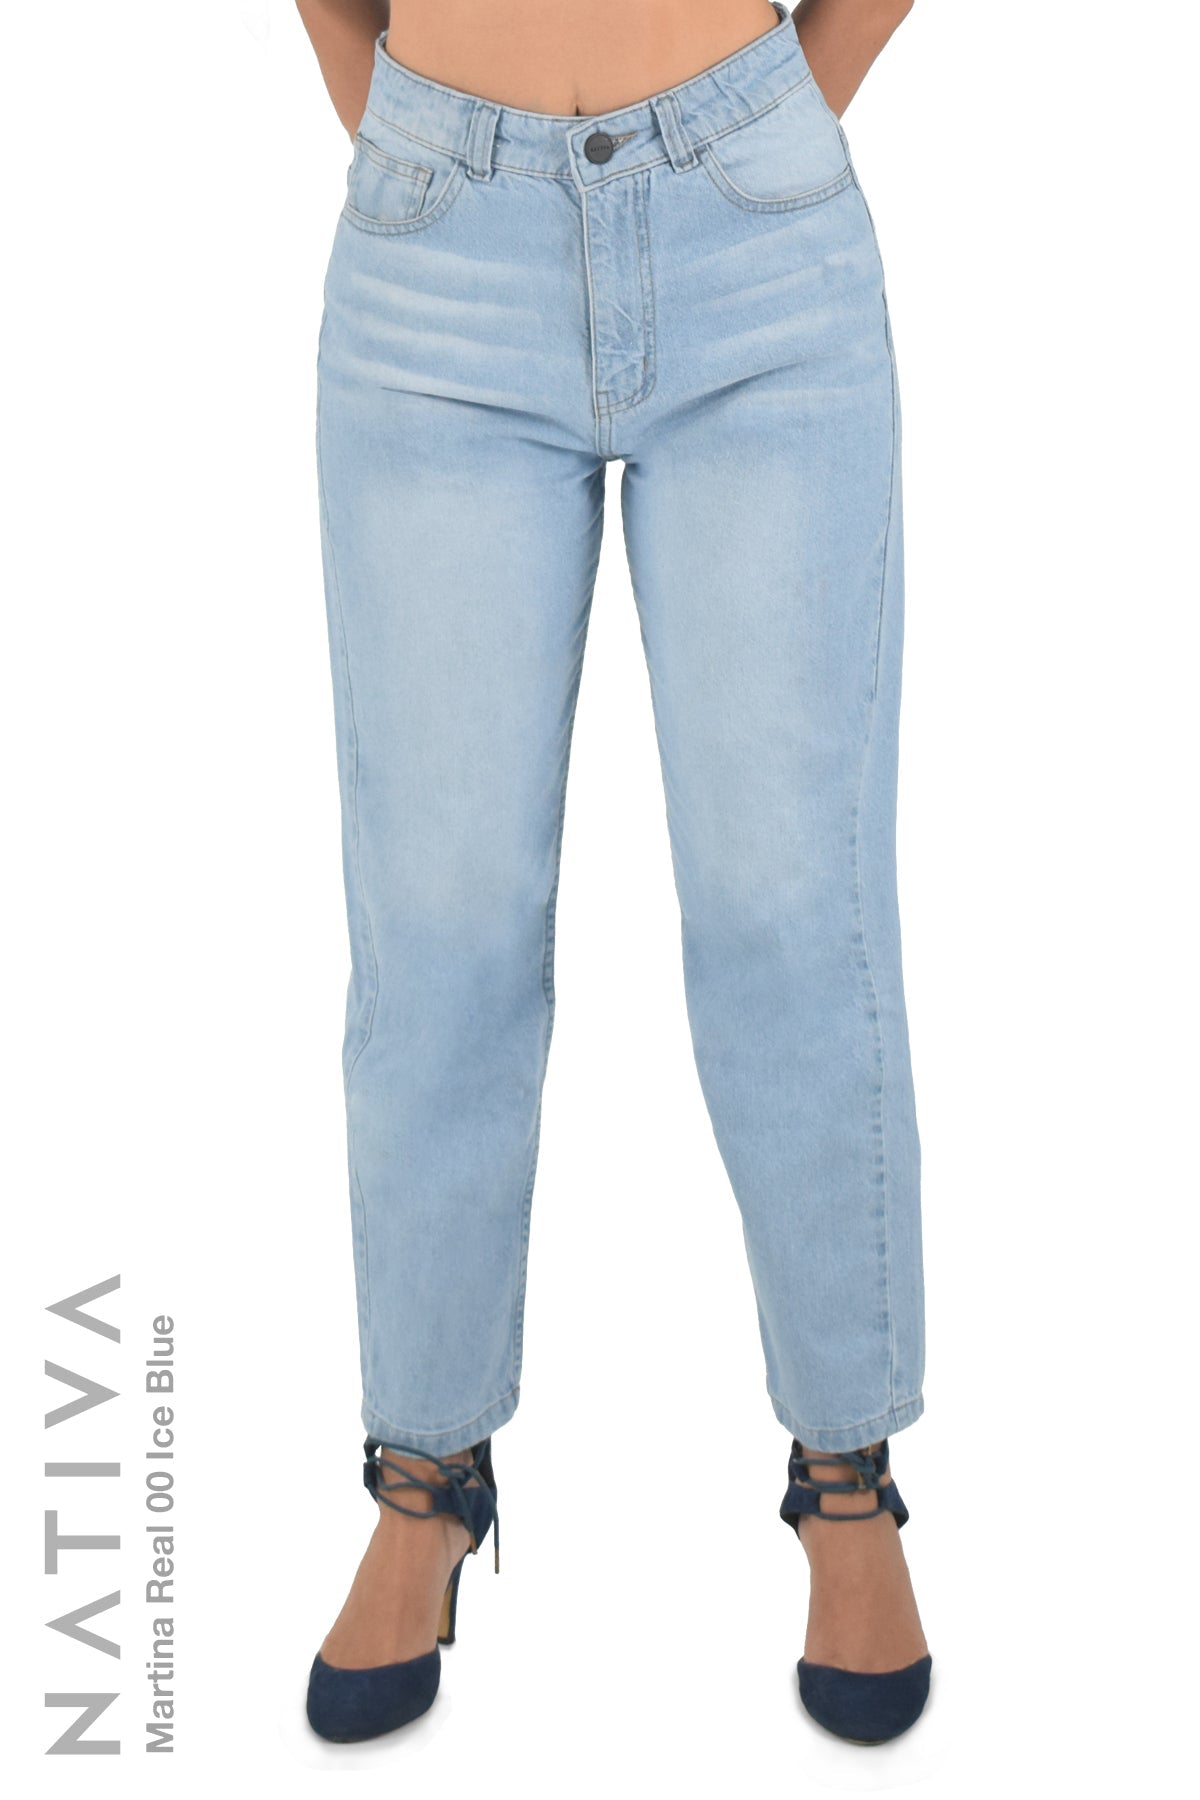 NATIVA, RIGID JEANS. MARTINA REAL 01 ICE BLUE, 100% True Denim Native  Virgin Cotton, Ideal Comfort, Hi-Rise Relaxed Mom Jeans